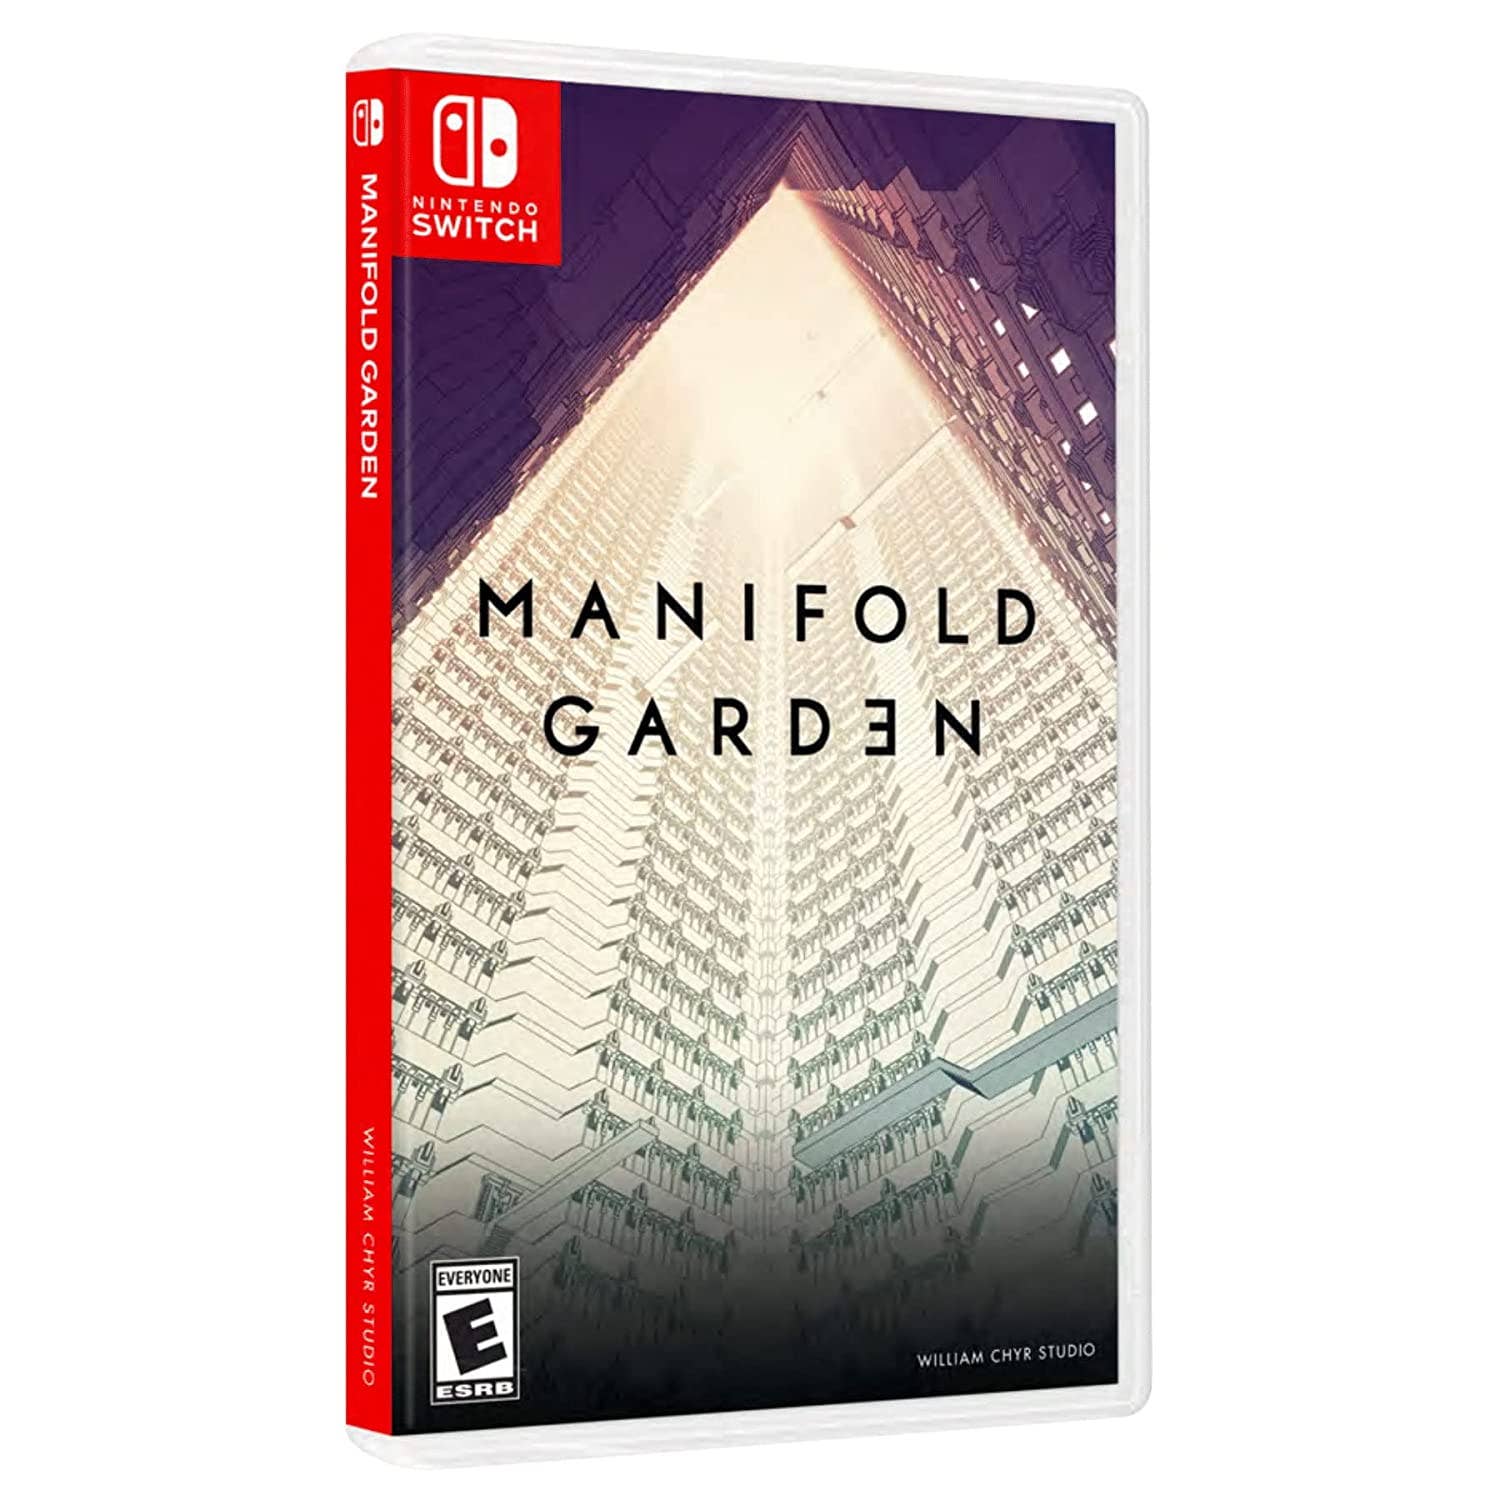 Iam8bit - Manifold Garden -Nintendo Switch